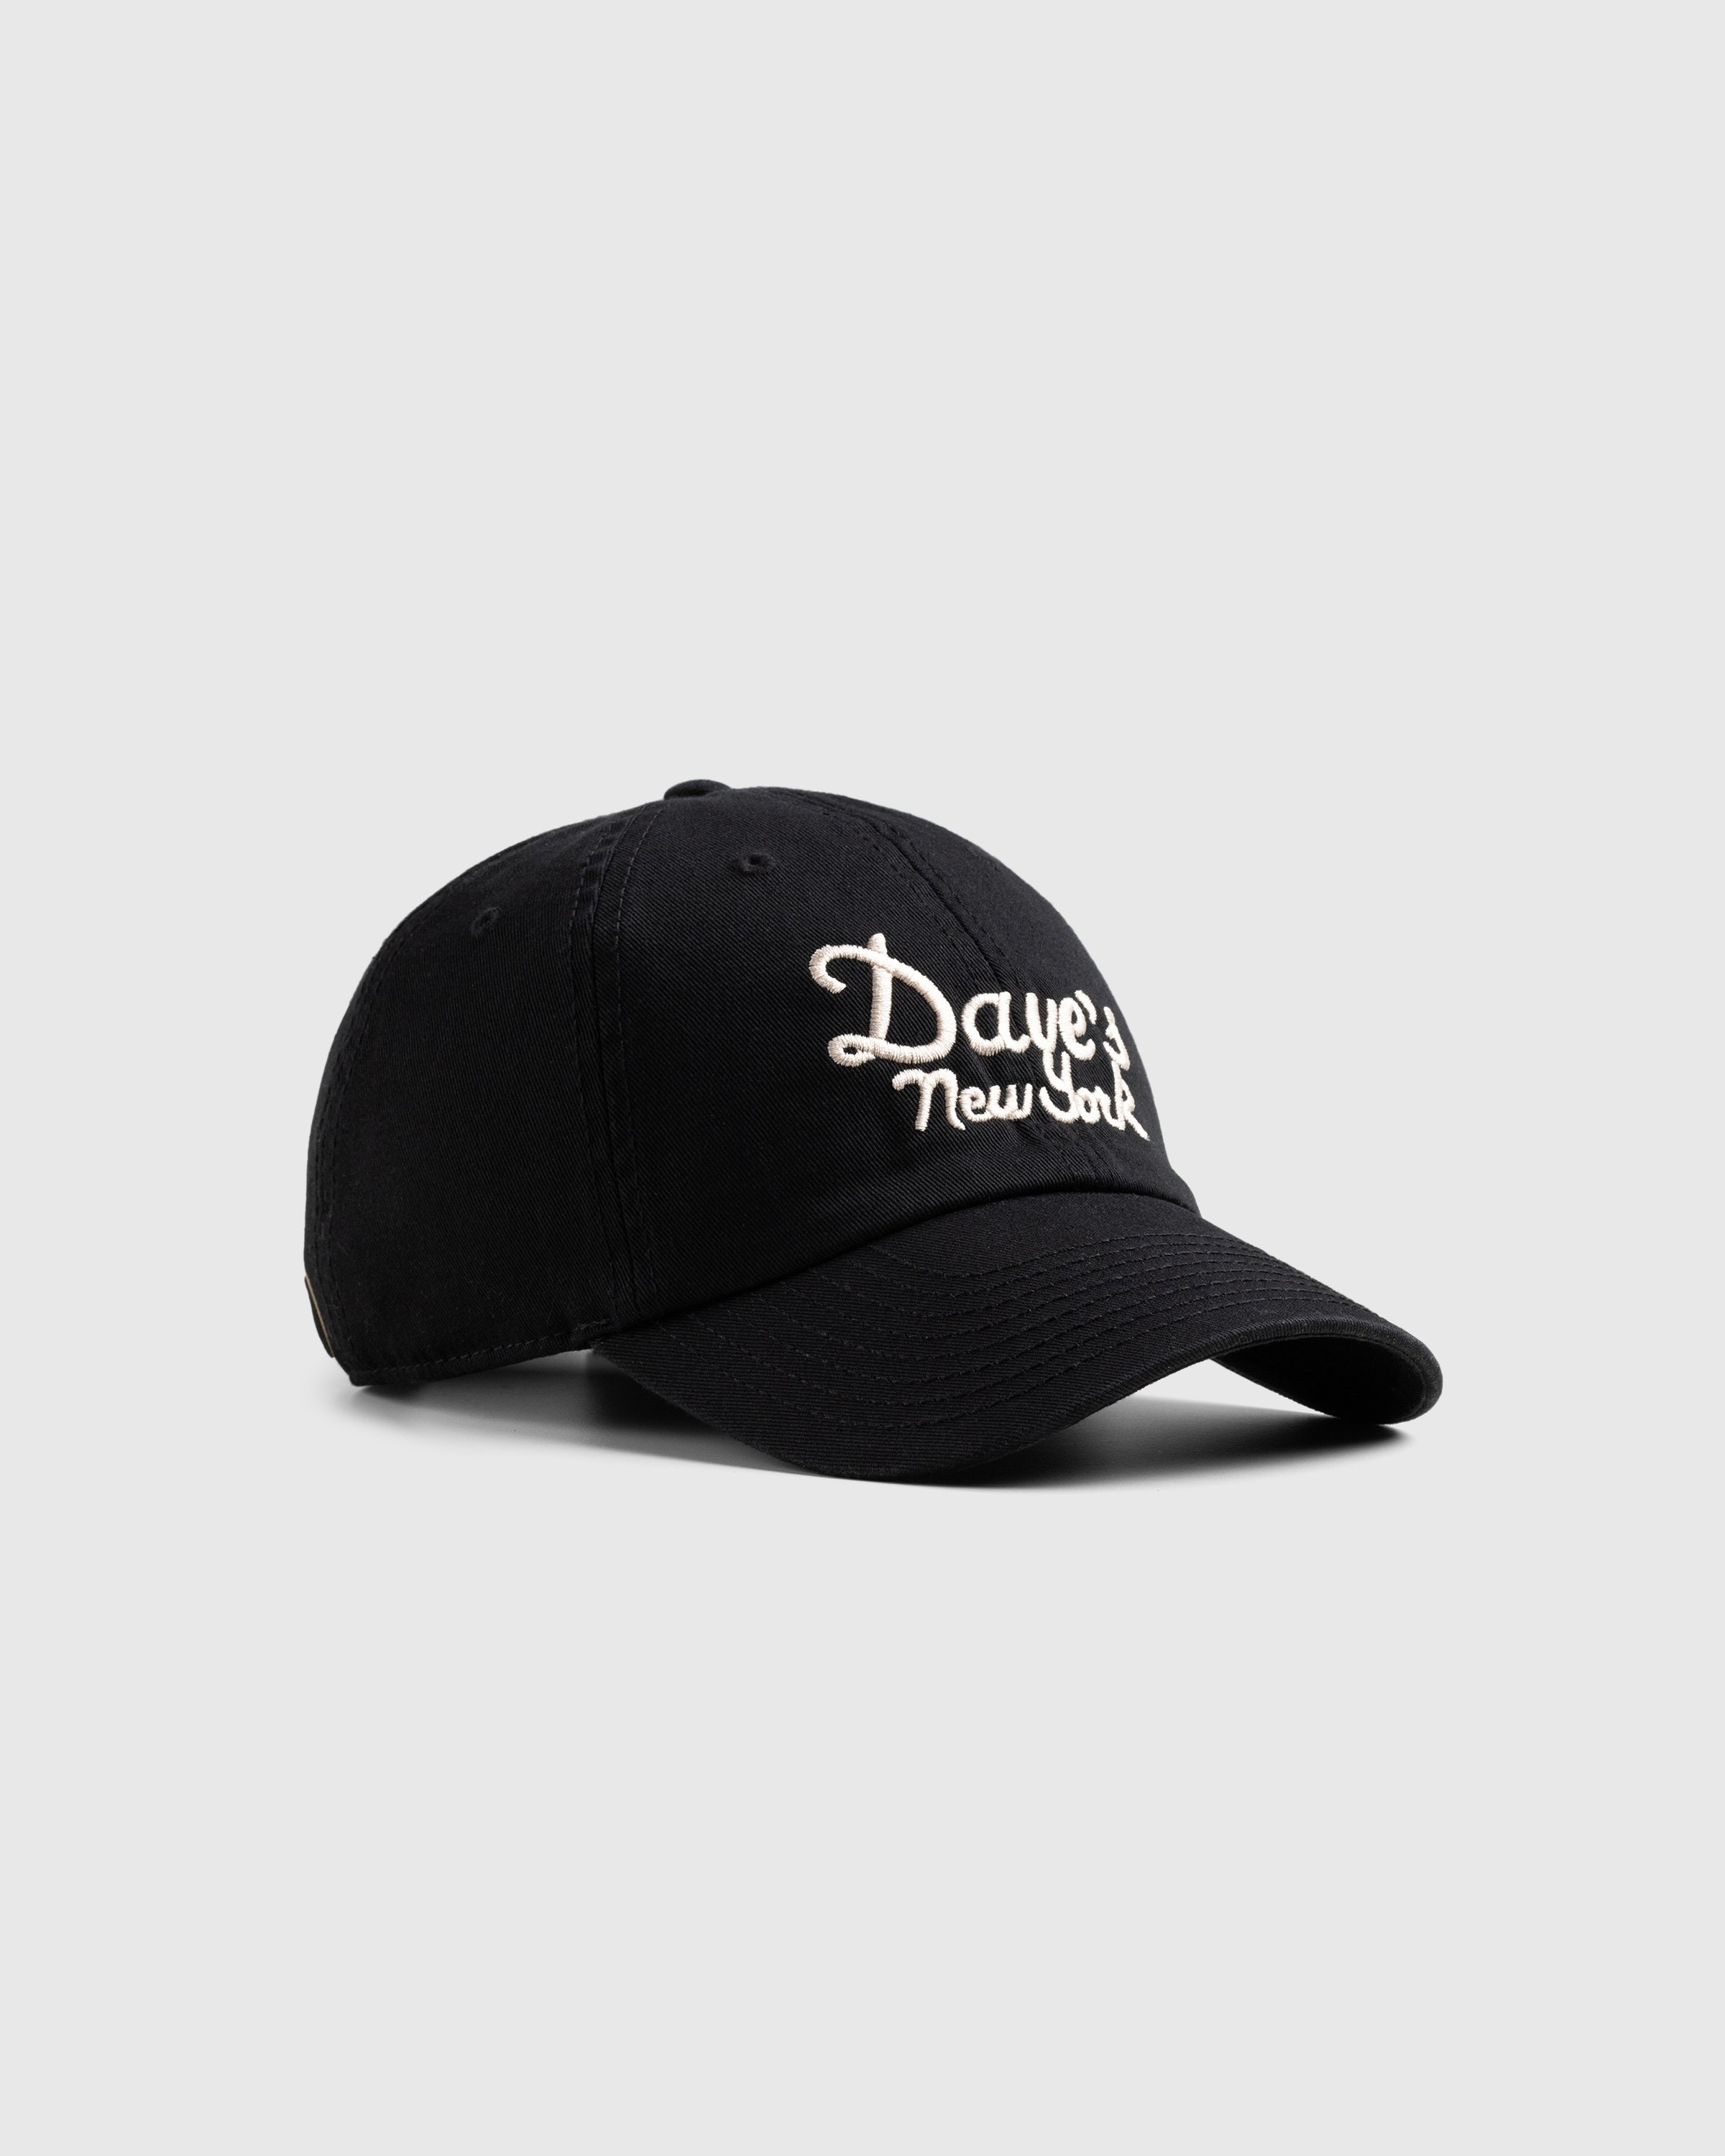 Dave's New York x Highsnobiety - Black Cap - Accessories - Black - Image 1